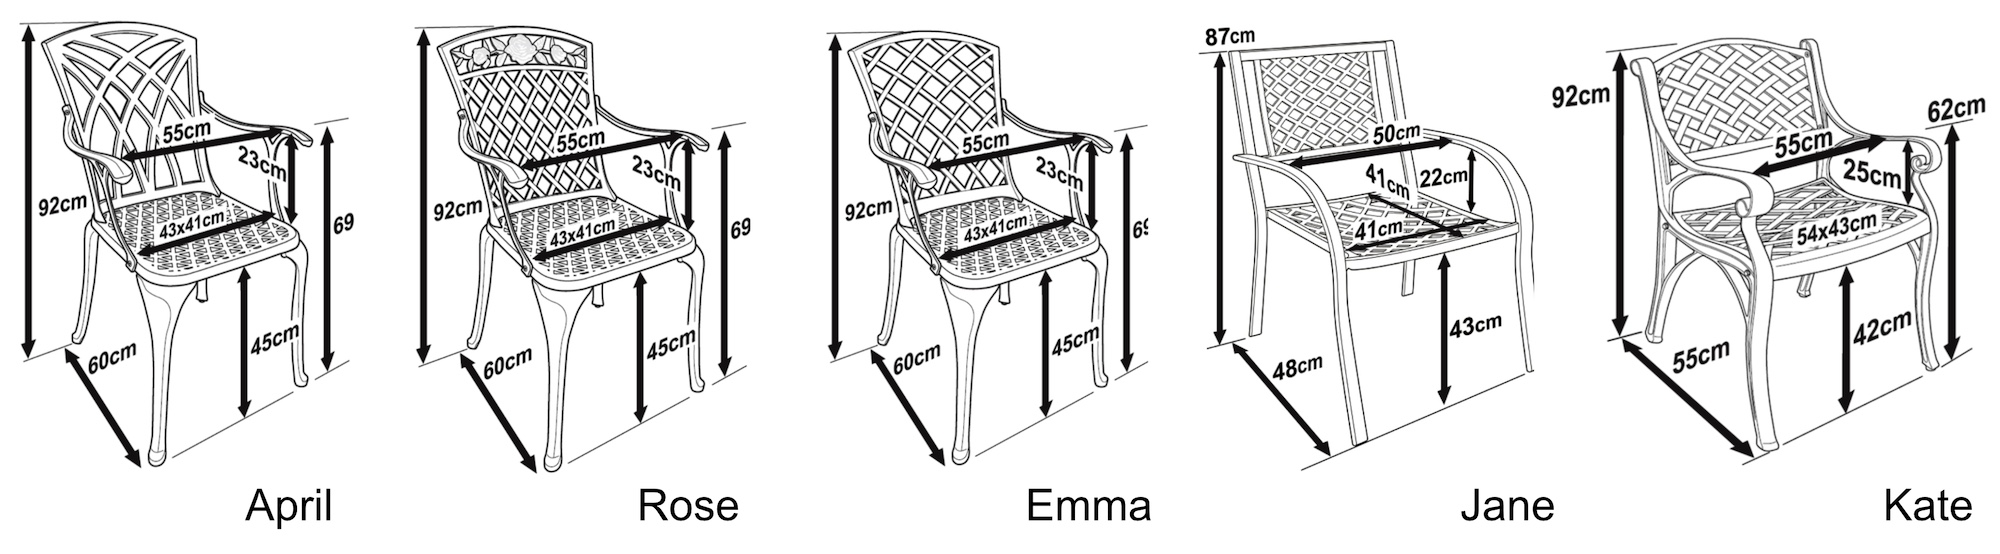 Garden Chair Dimensions